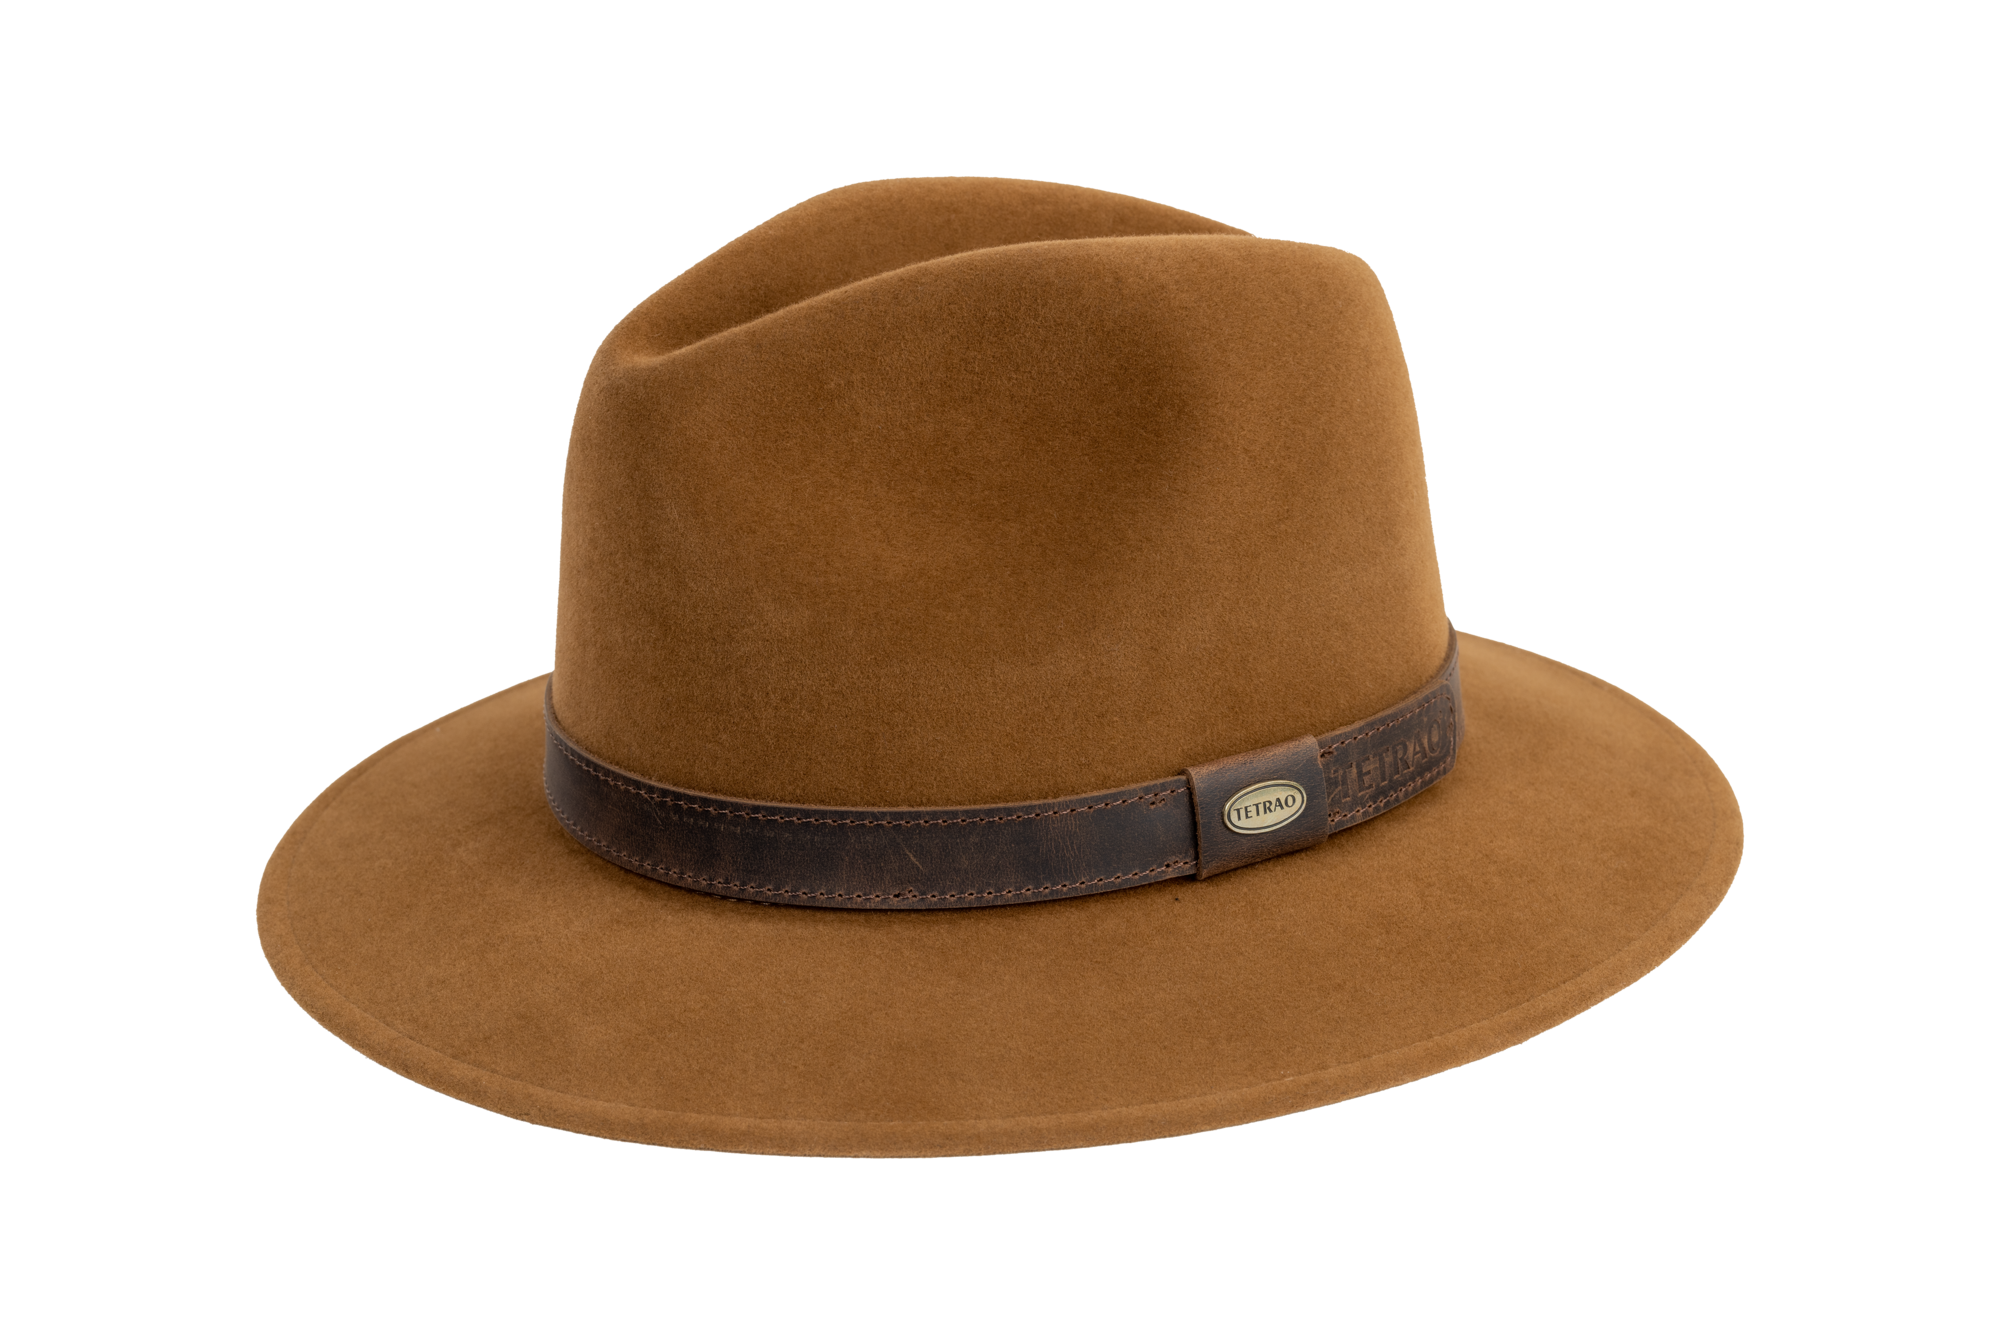 Poľovnícky klobúk TETRAO Exclusive zajac - hnedý  58